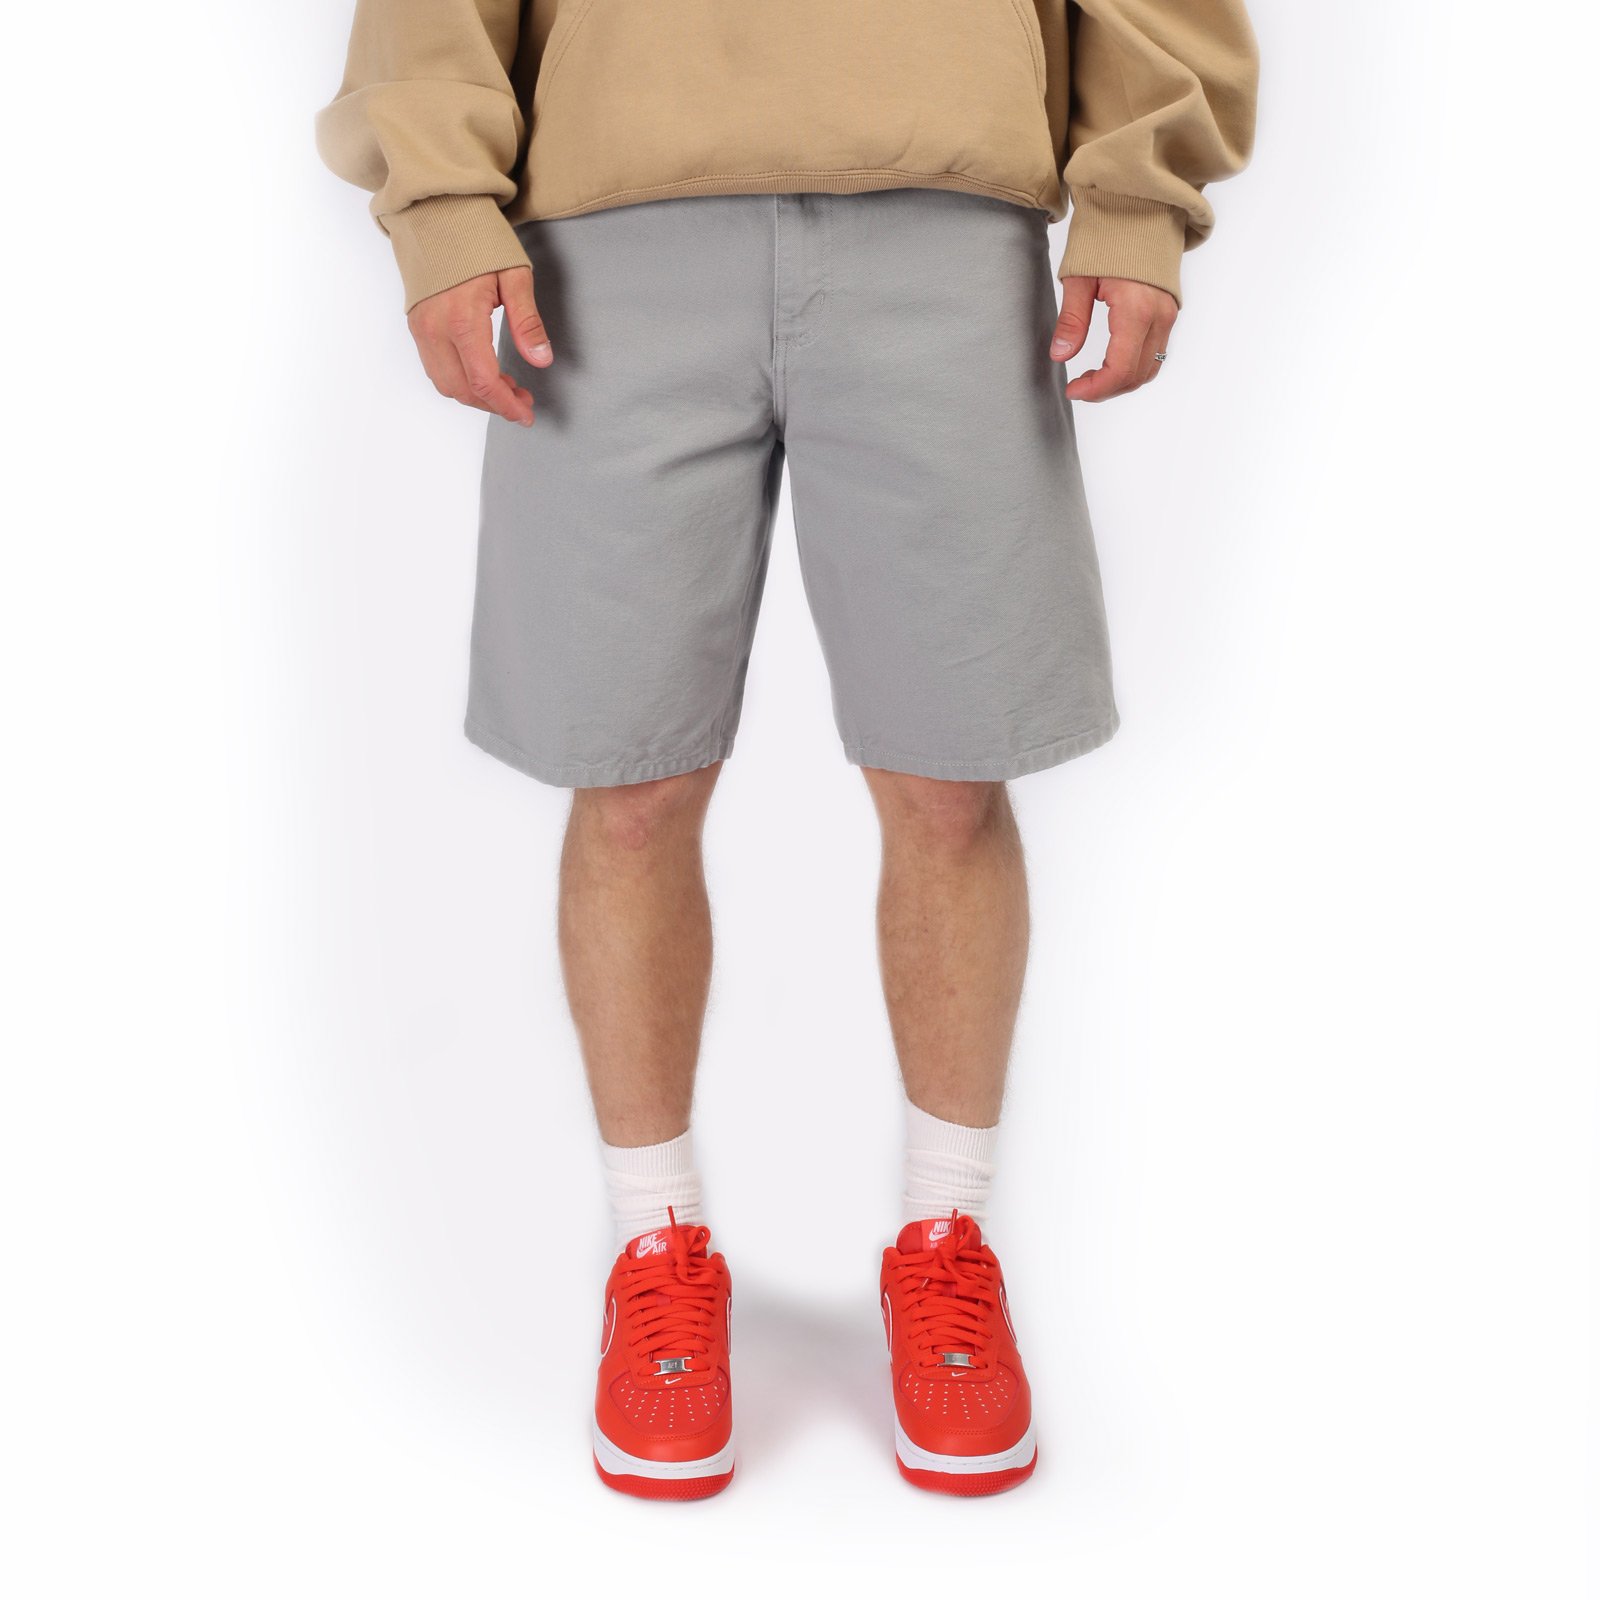 мужские шорты Carhartt WIP Single Knee Short  (I027942-marengo)  - цена, описание, фото 1